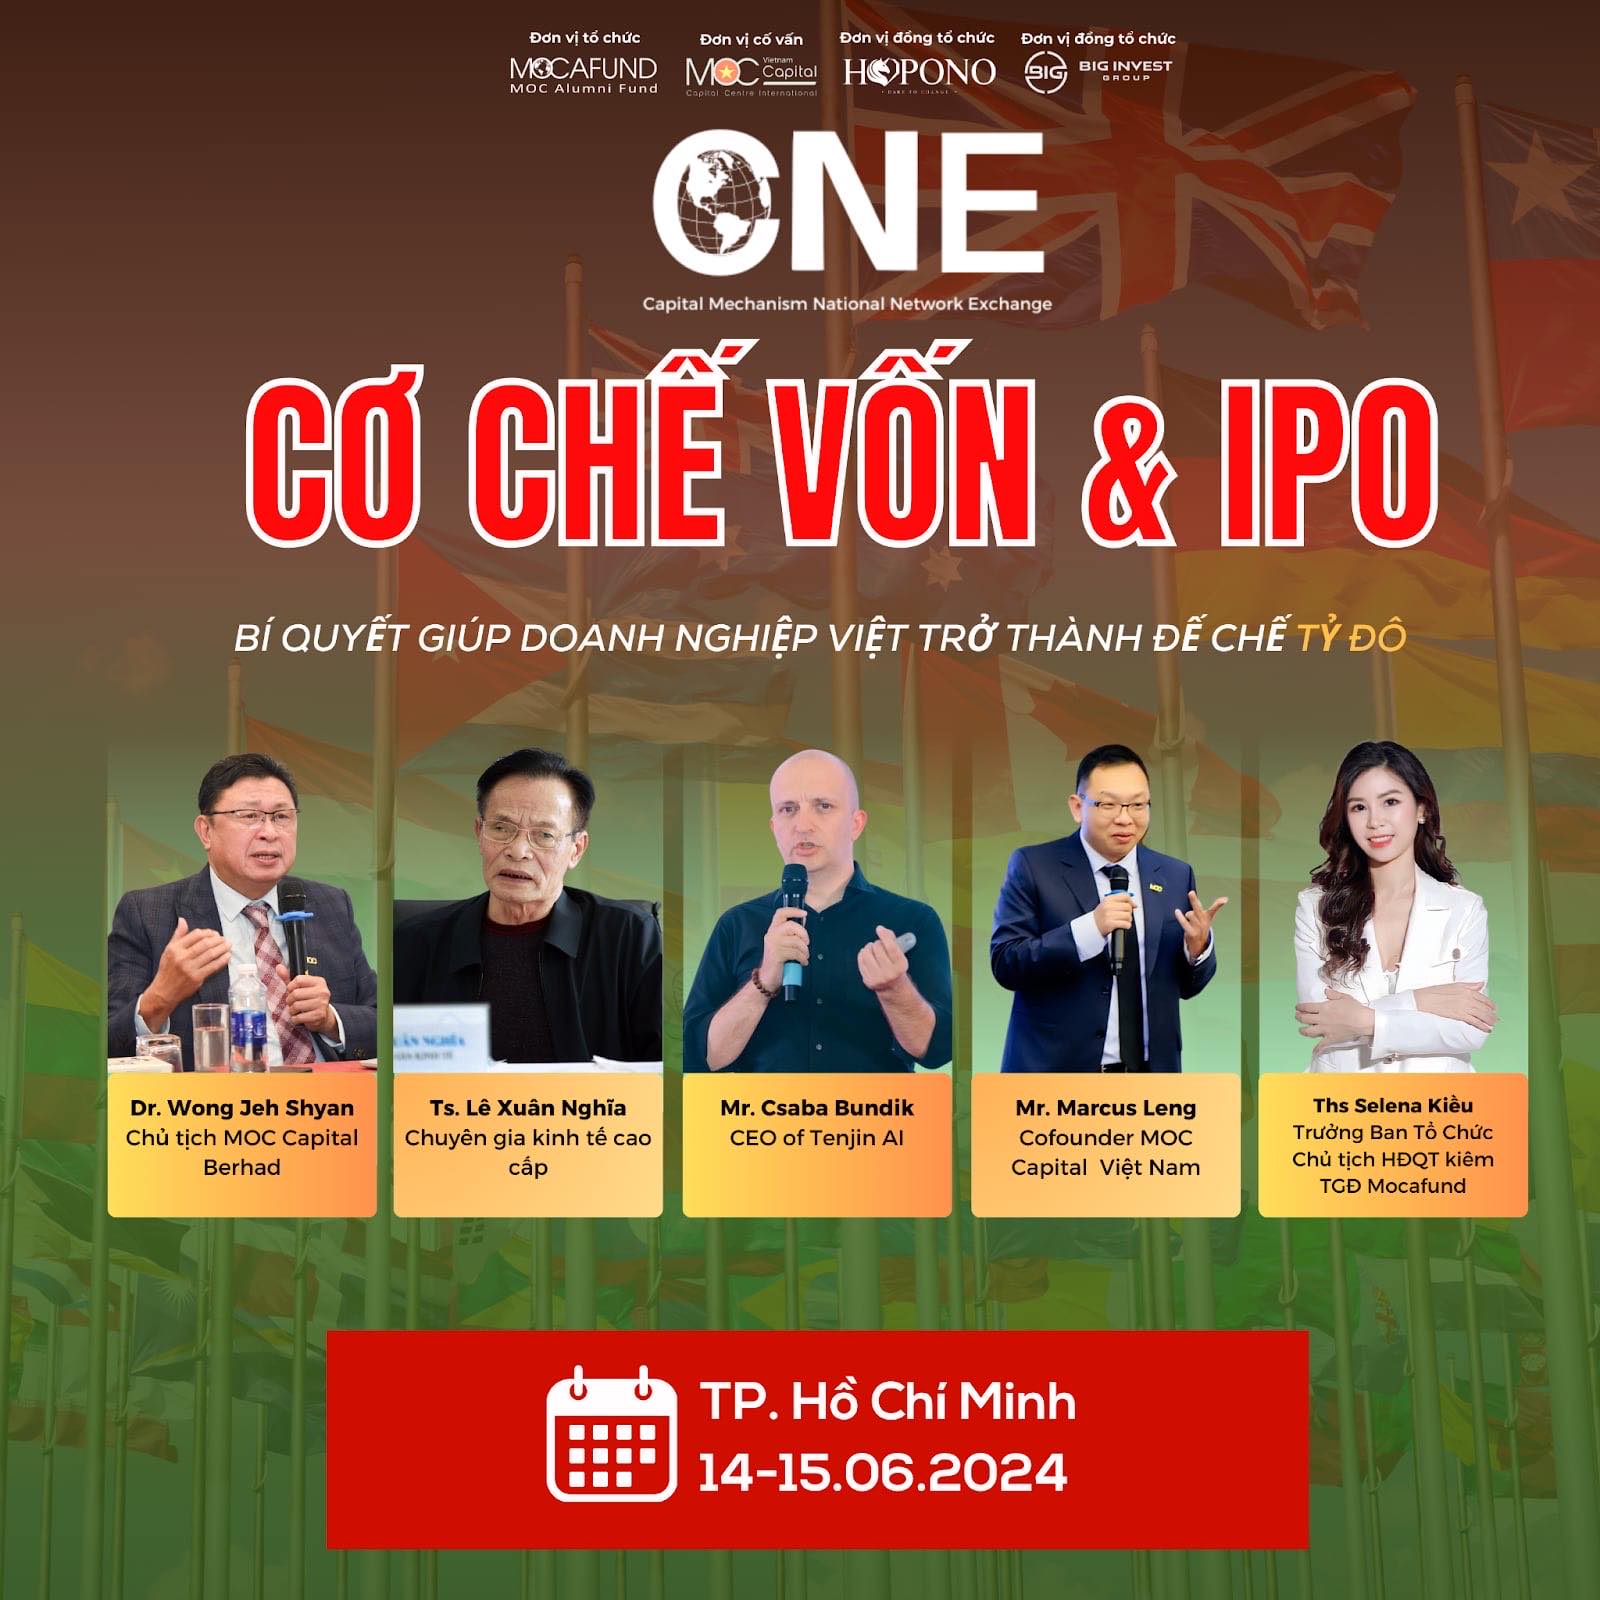 Khat vong Quoc Gia Dien dan Co che von va Con duong IPO